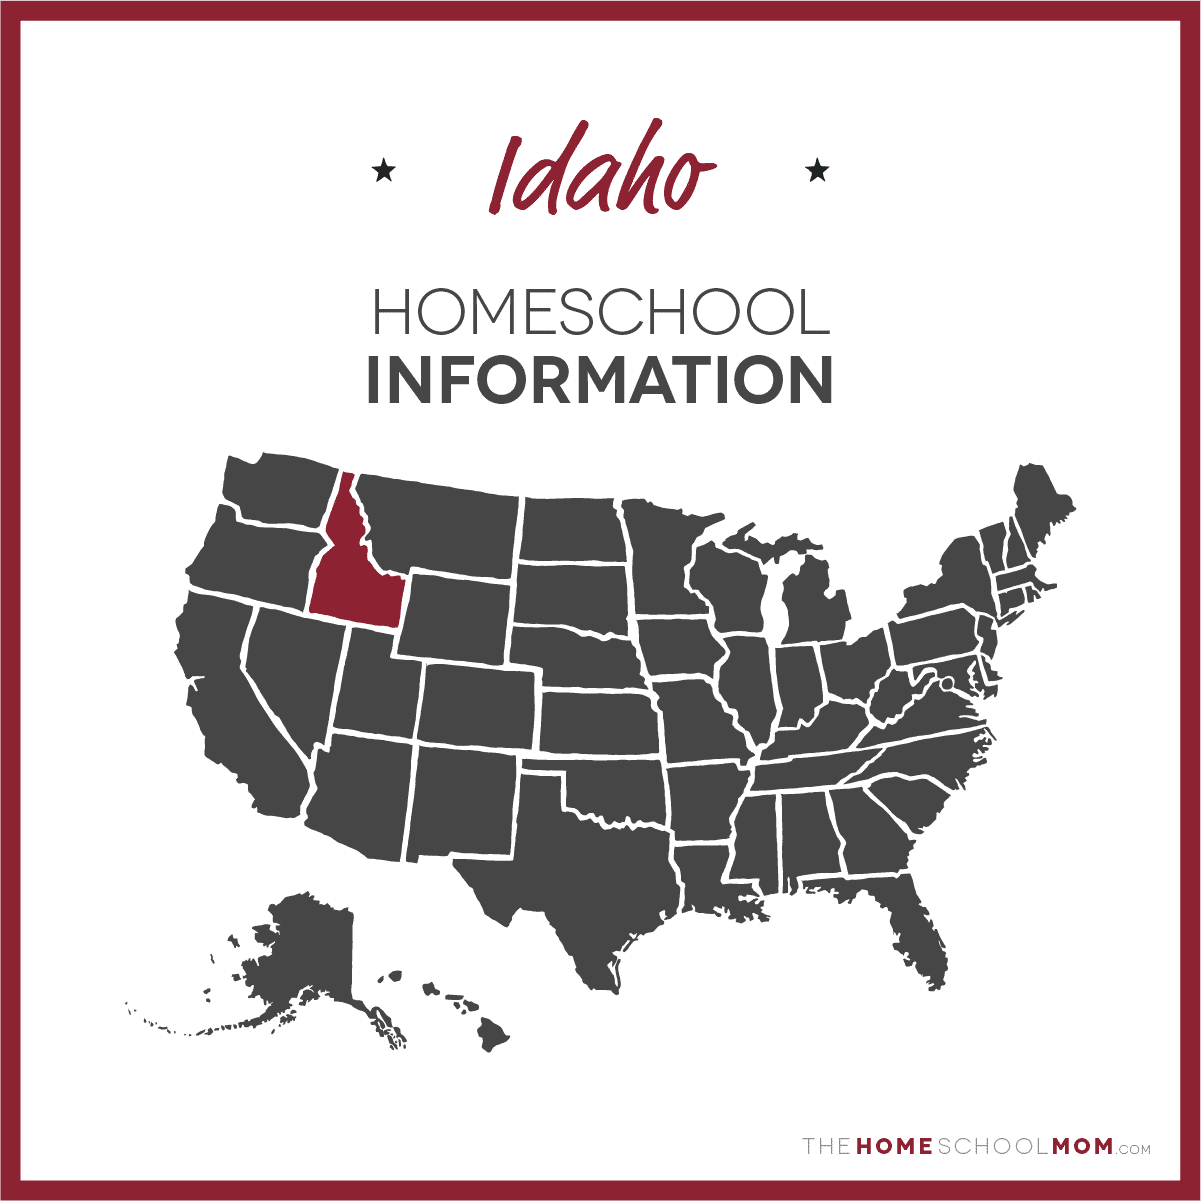 Idaho Homeschool Information